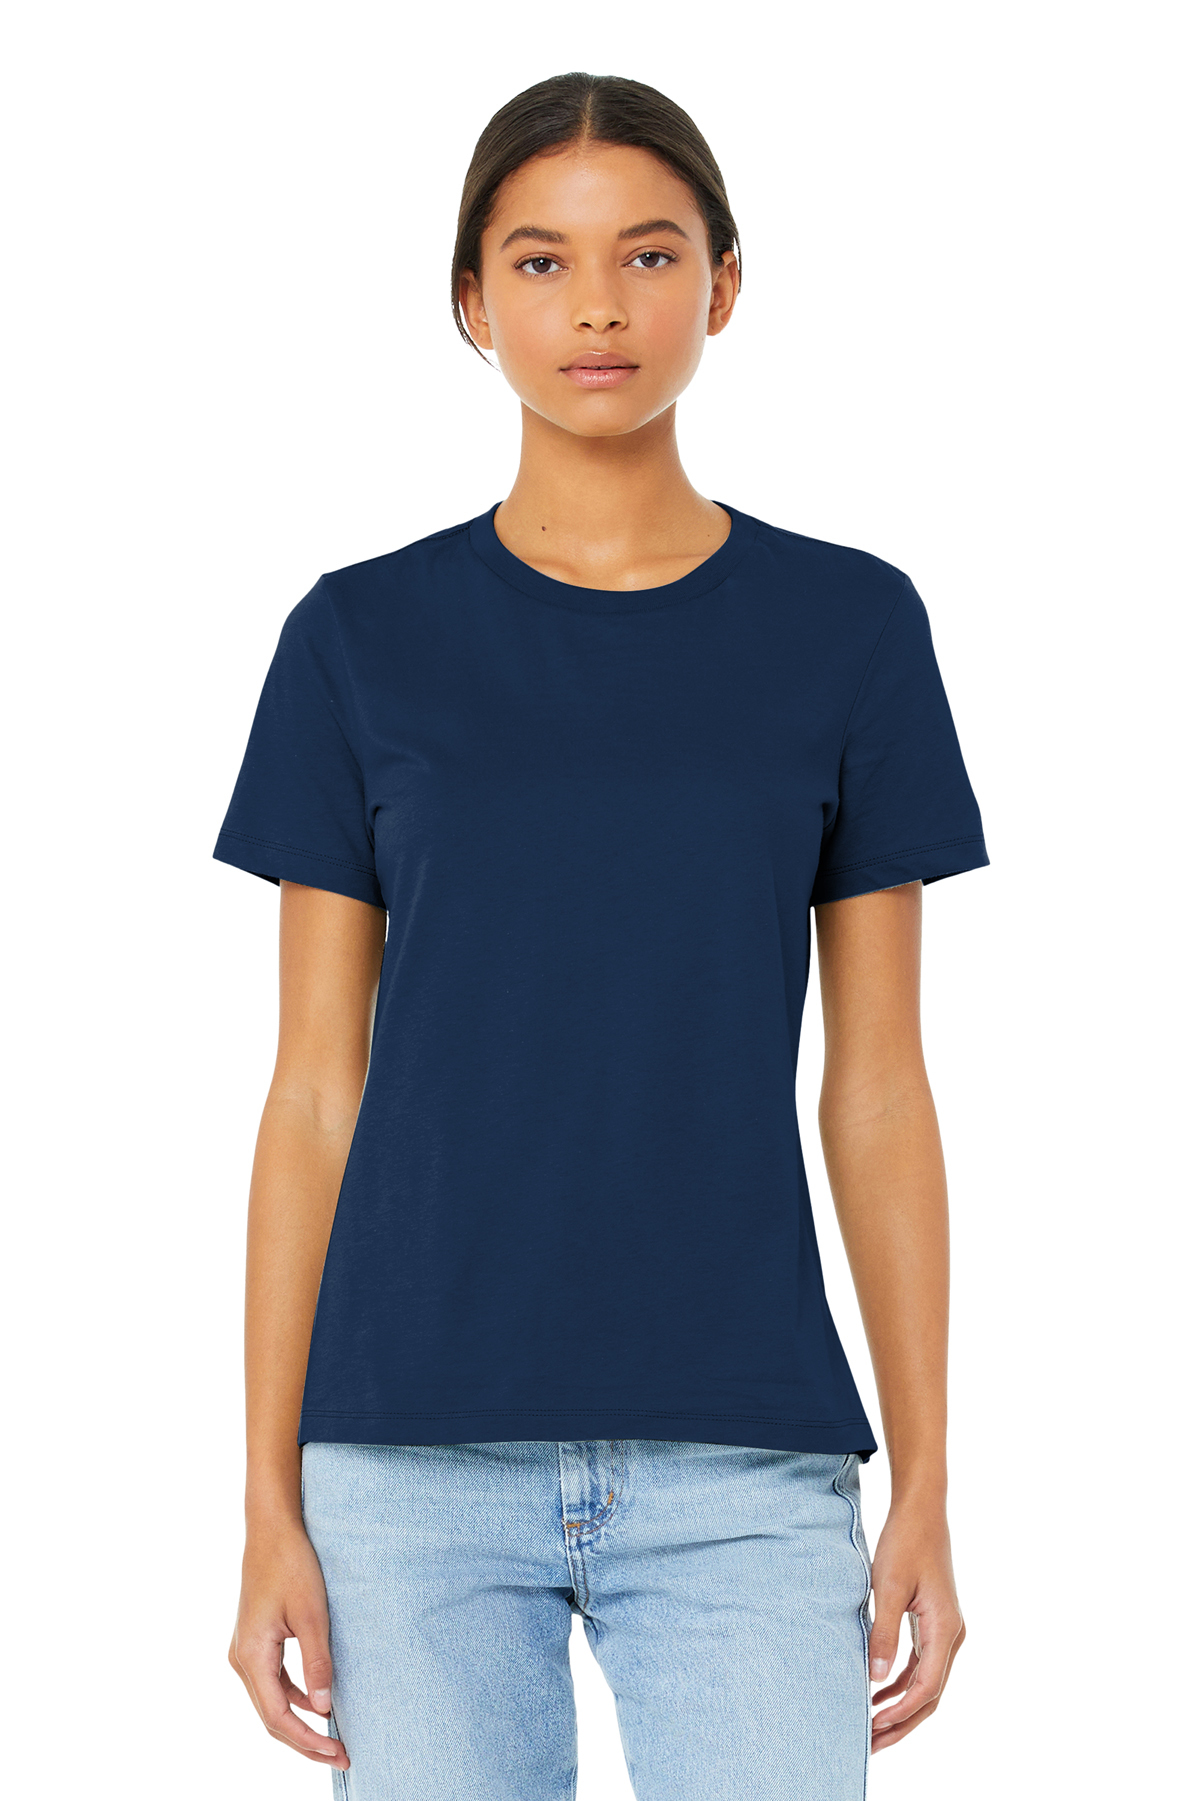 Women's Cotton Short-Sleeve T-Shirt In Navy Blue - Lake Jane Studio